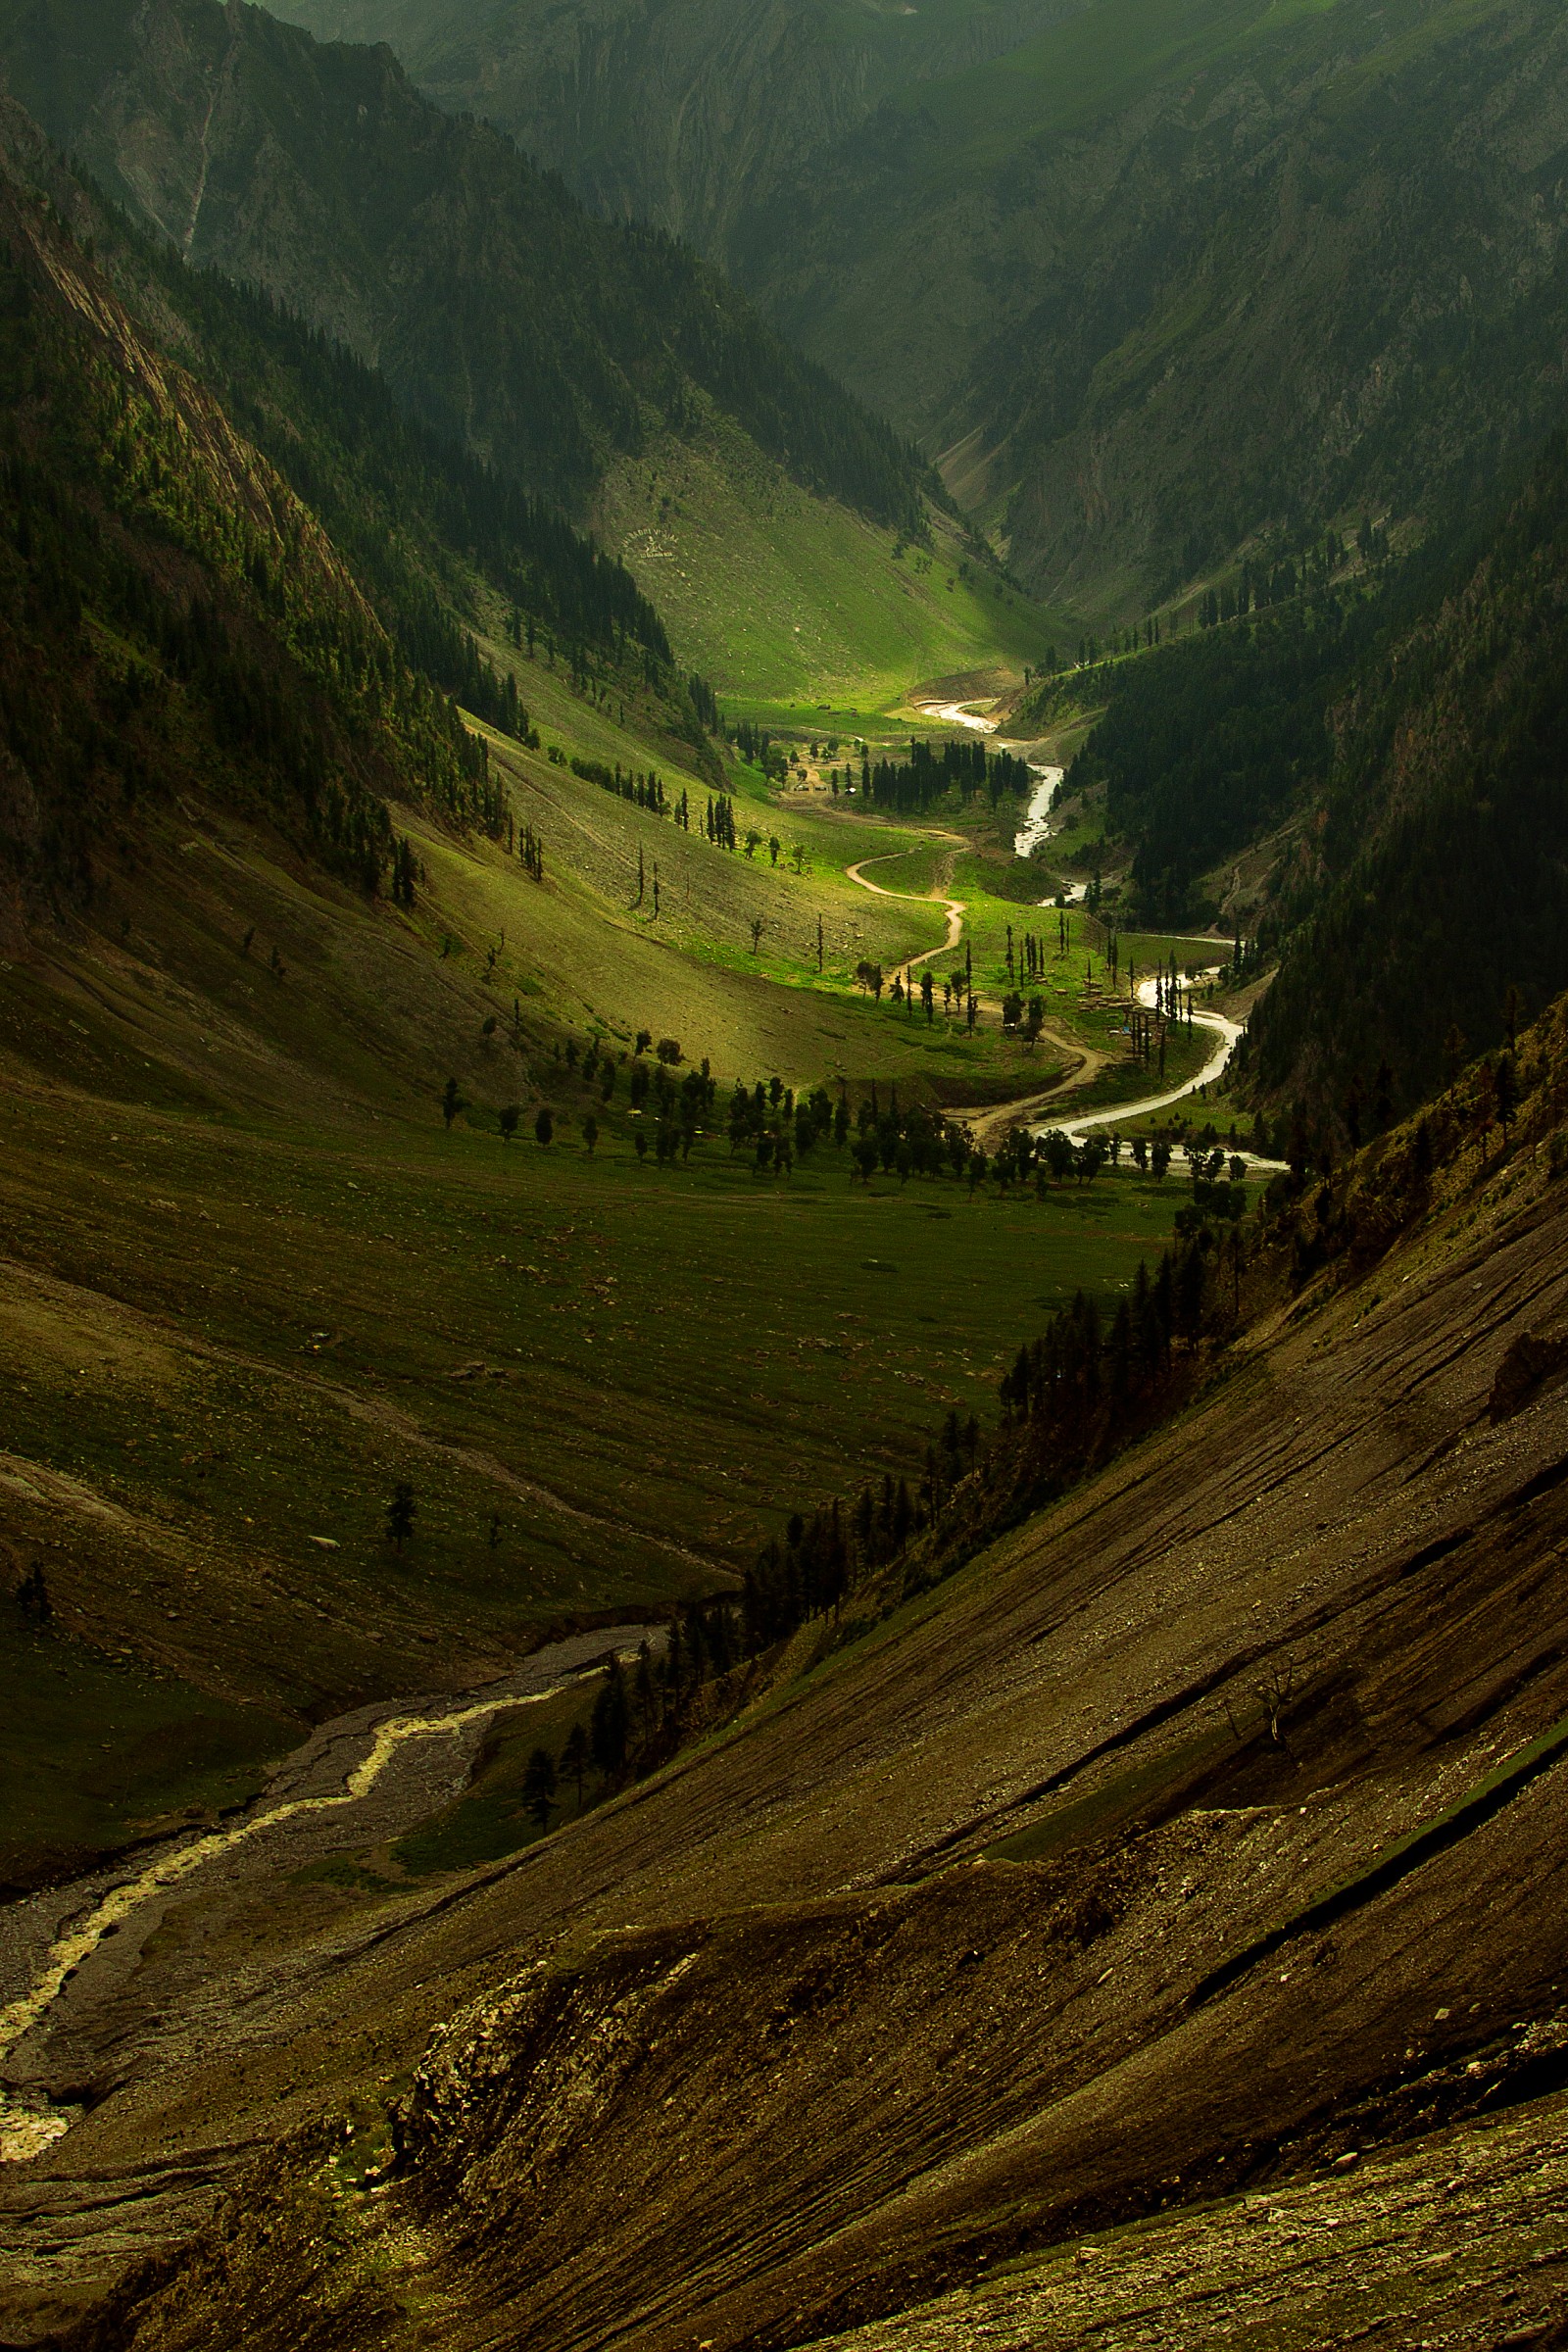 A Himayalan Valley...